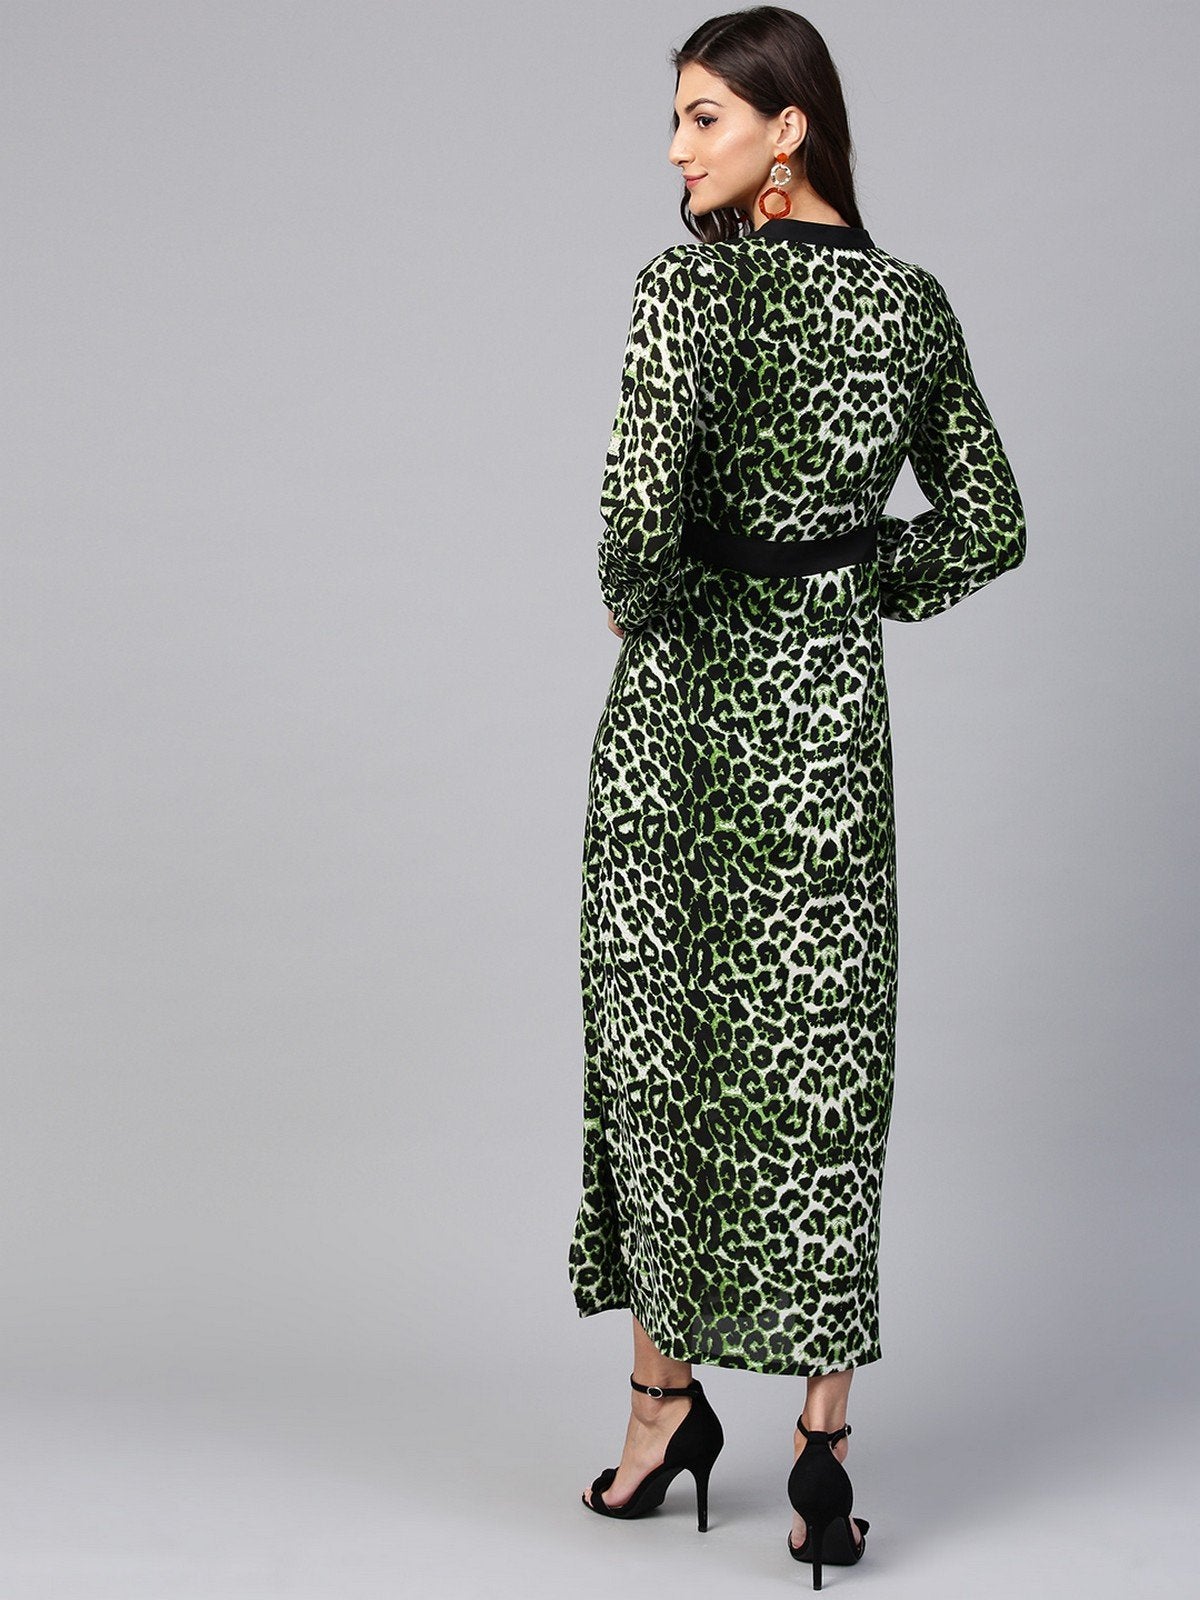 Women's Animal Print Maxi Dress With Embellished Belt - Pannkh